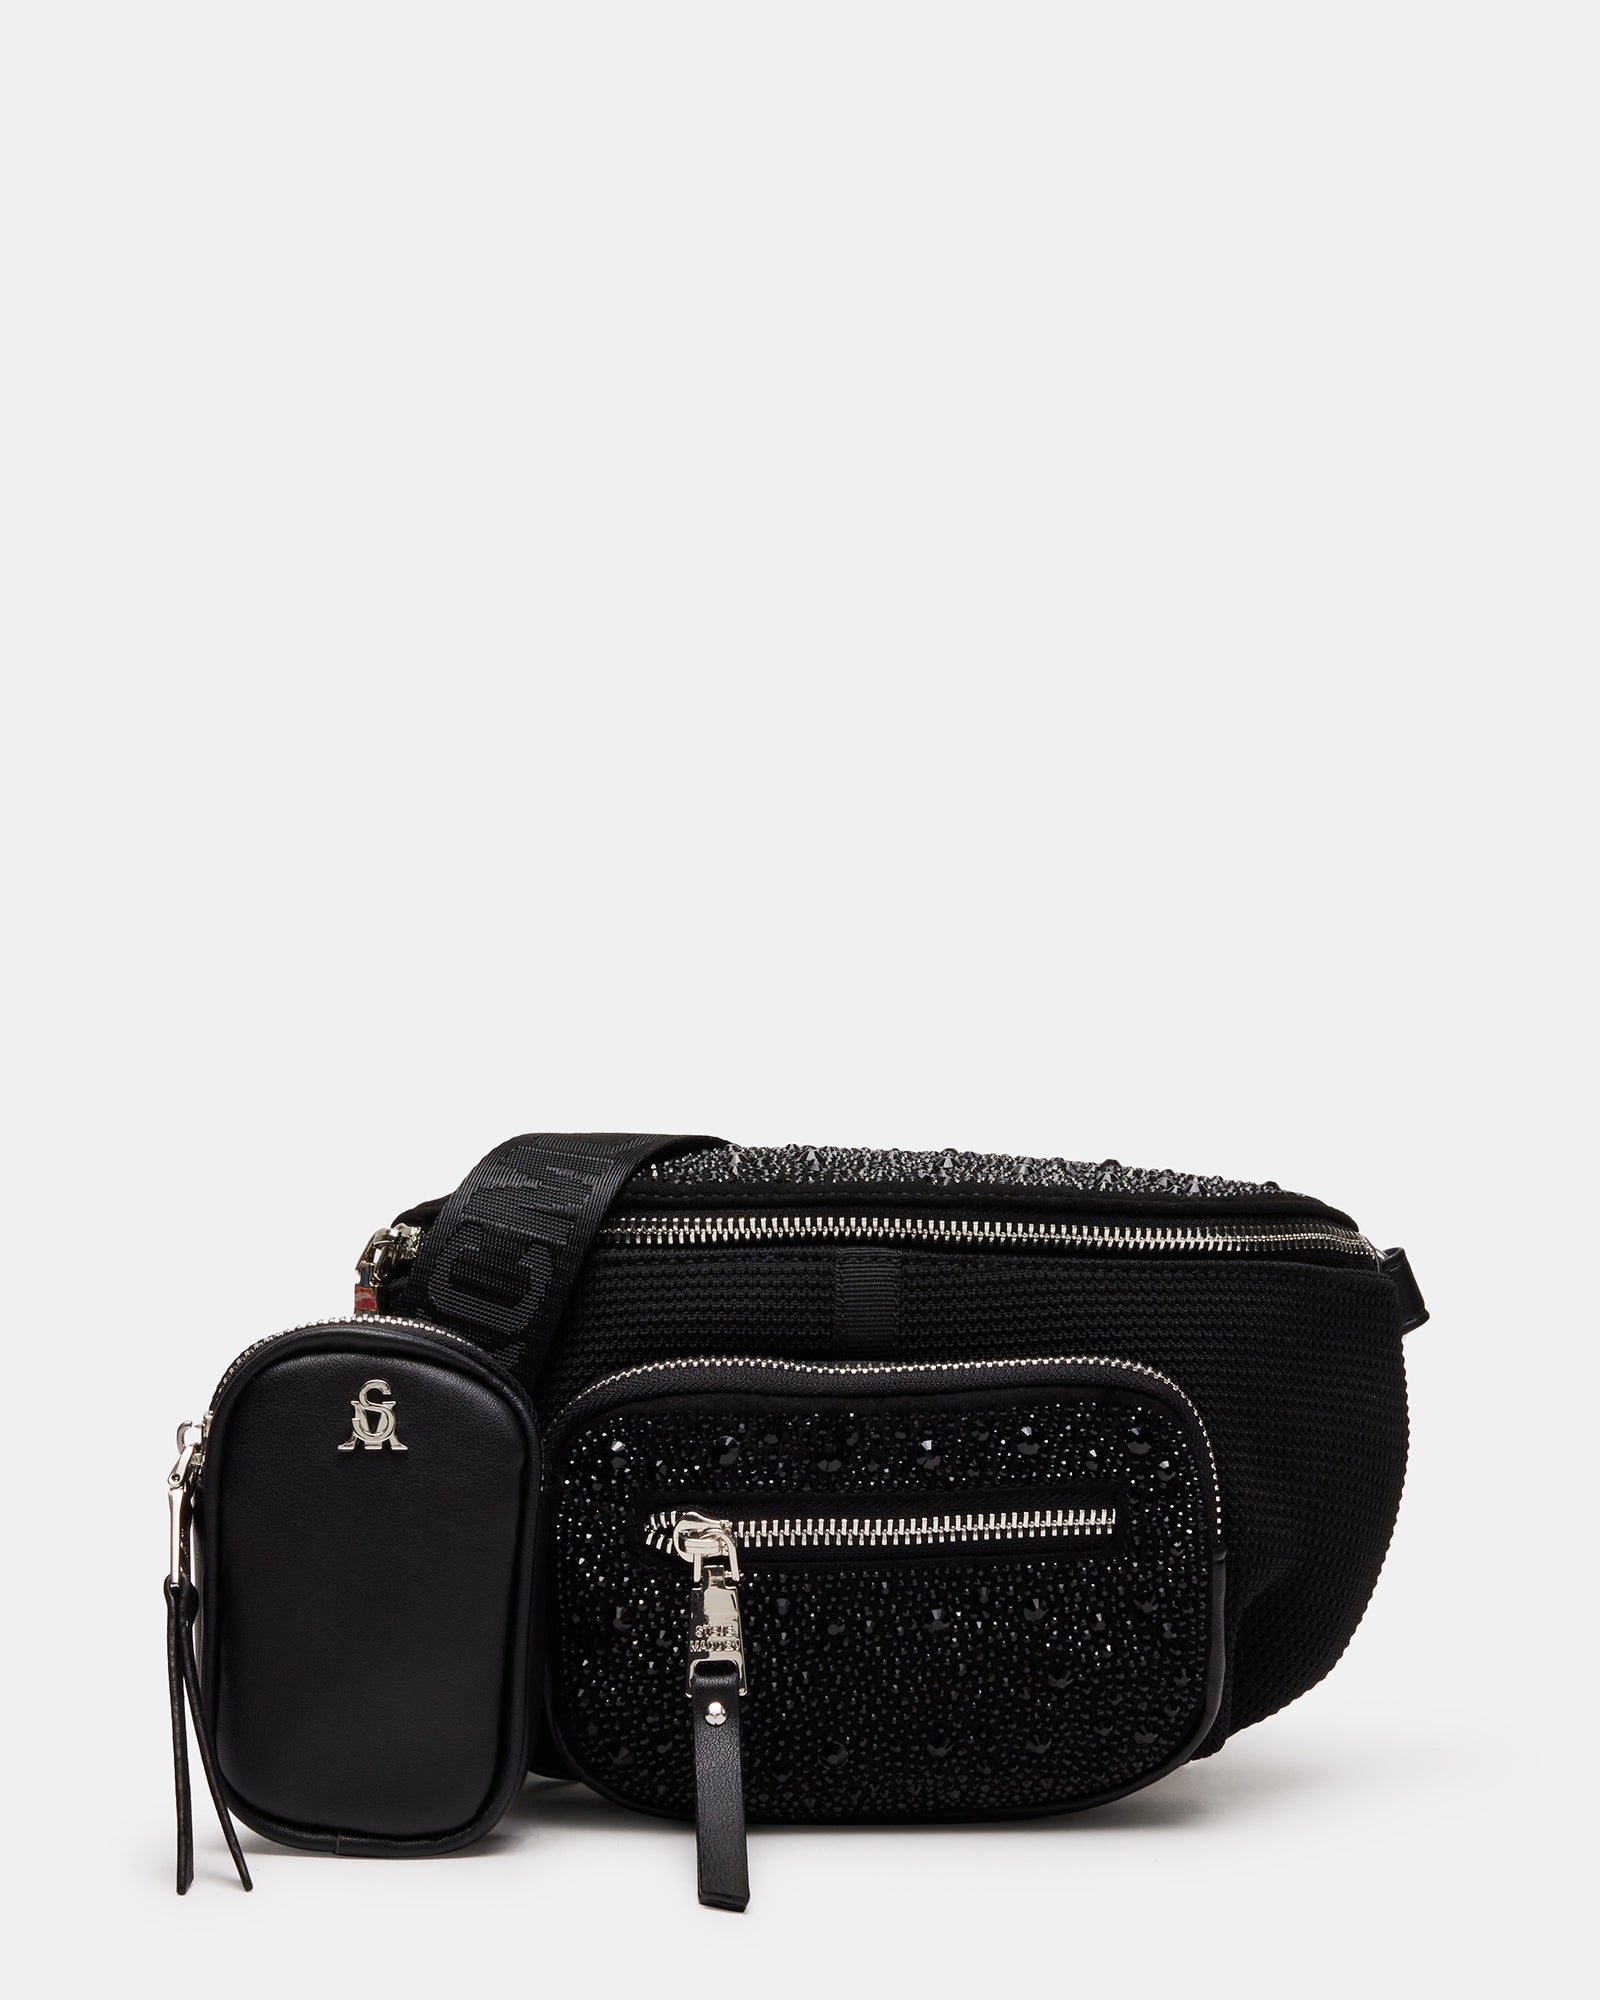 Genuine Leather Belt Bag, Leather Fanny Pack, For Women, For Men, Unis